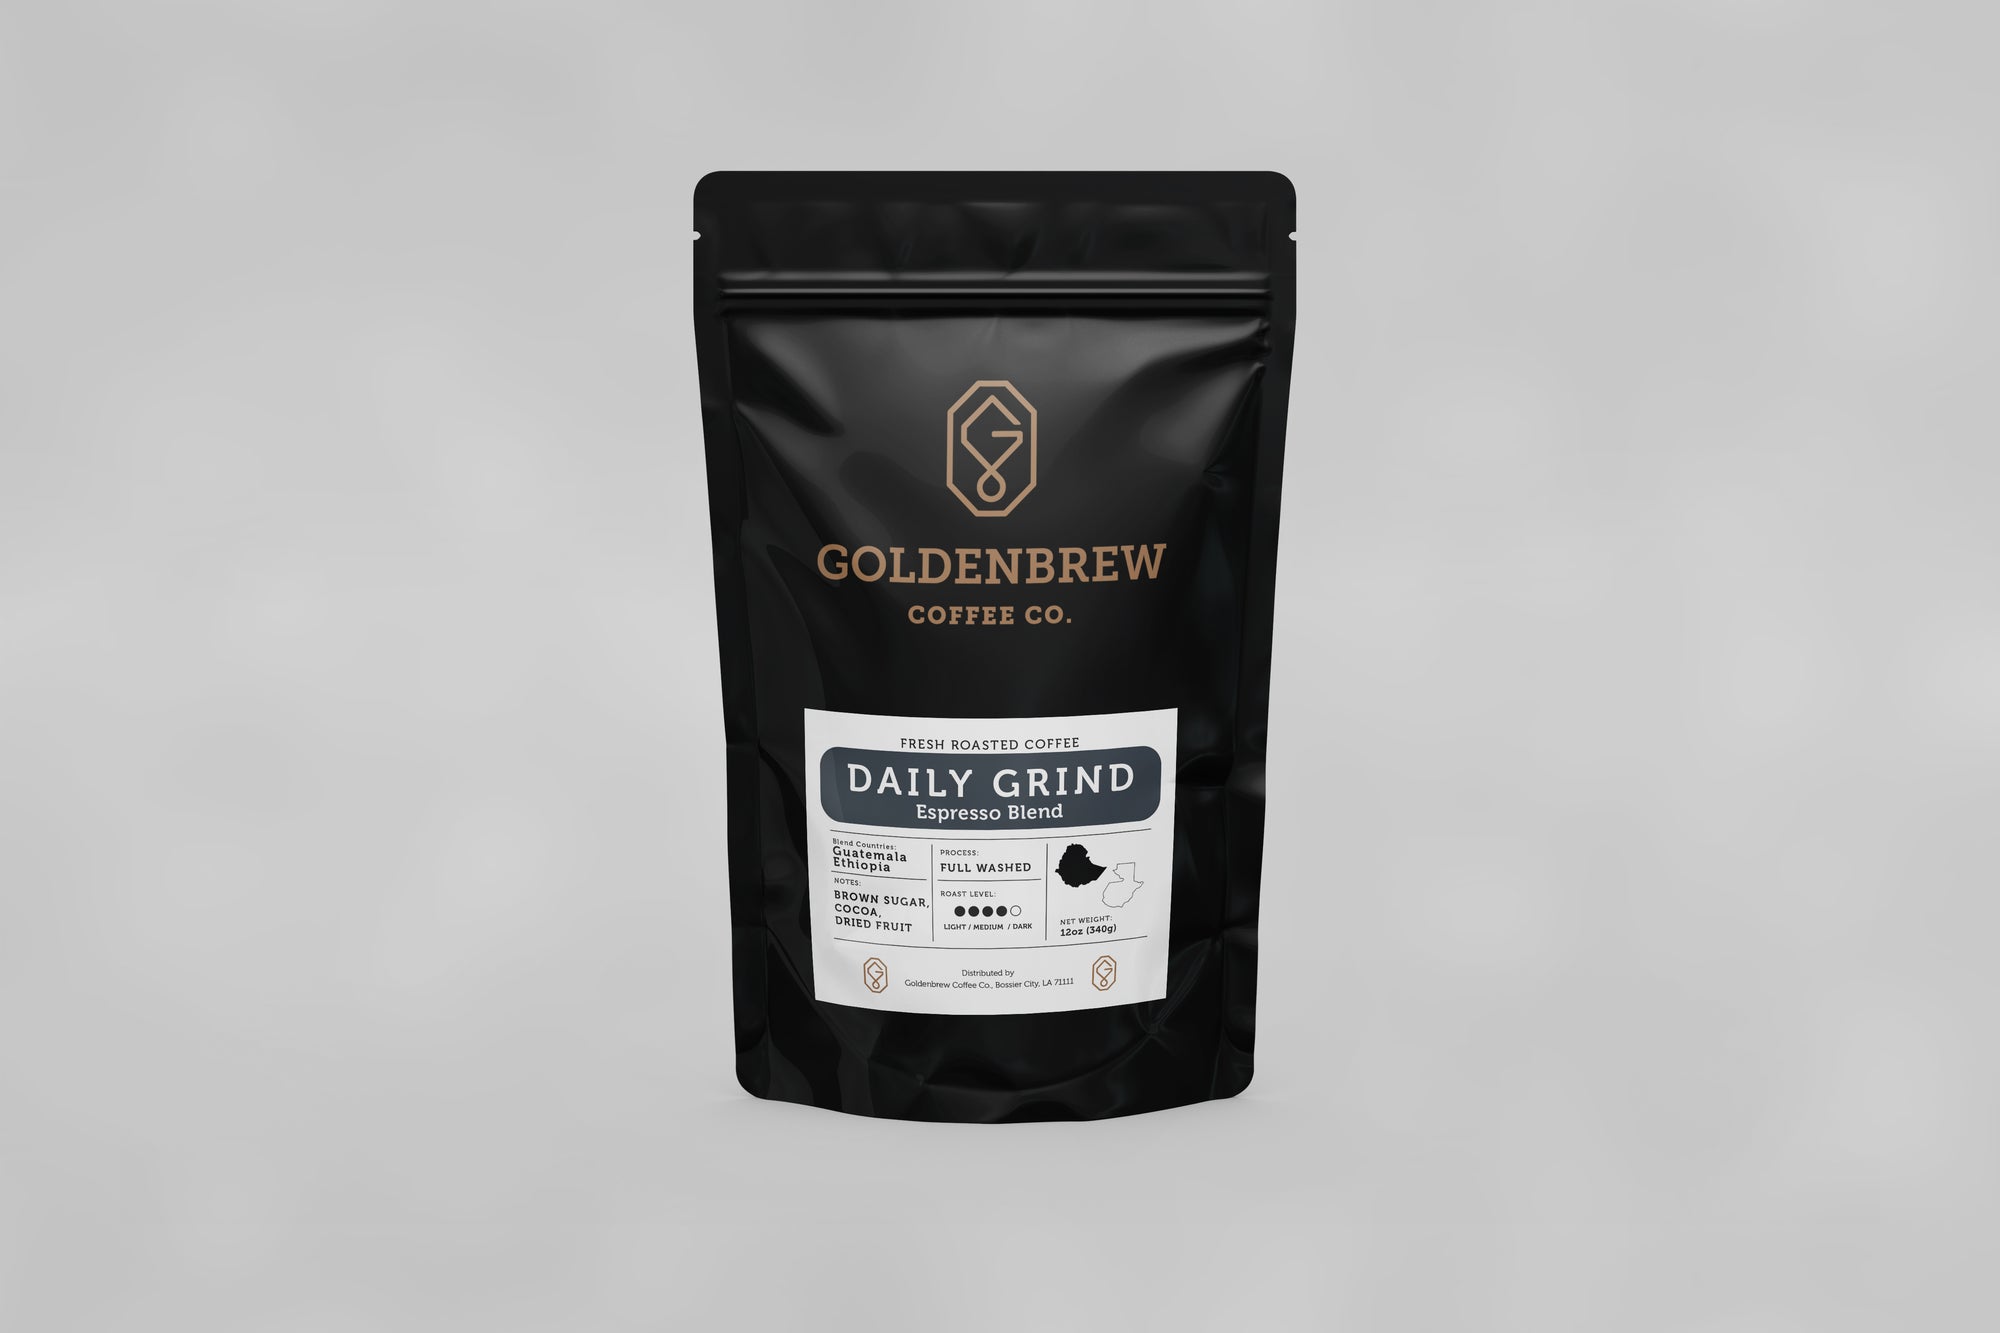 Daily Grind (Espresso Blend)